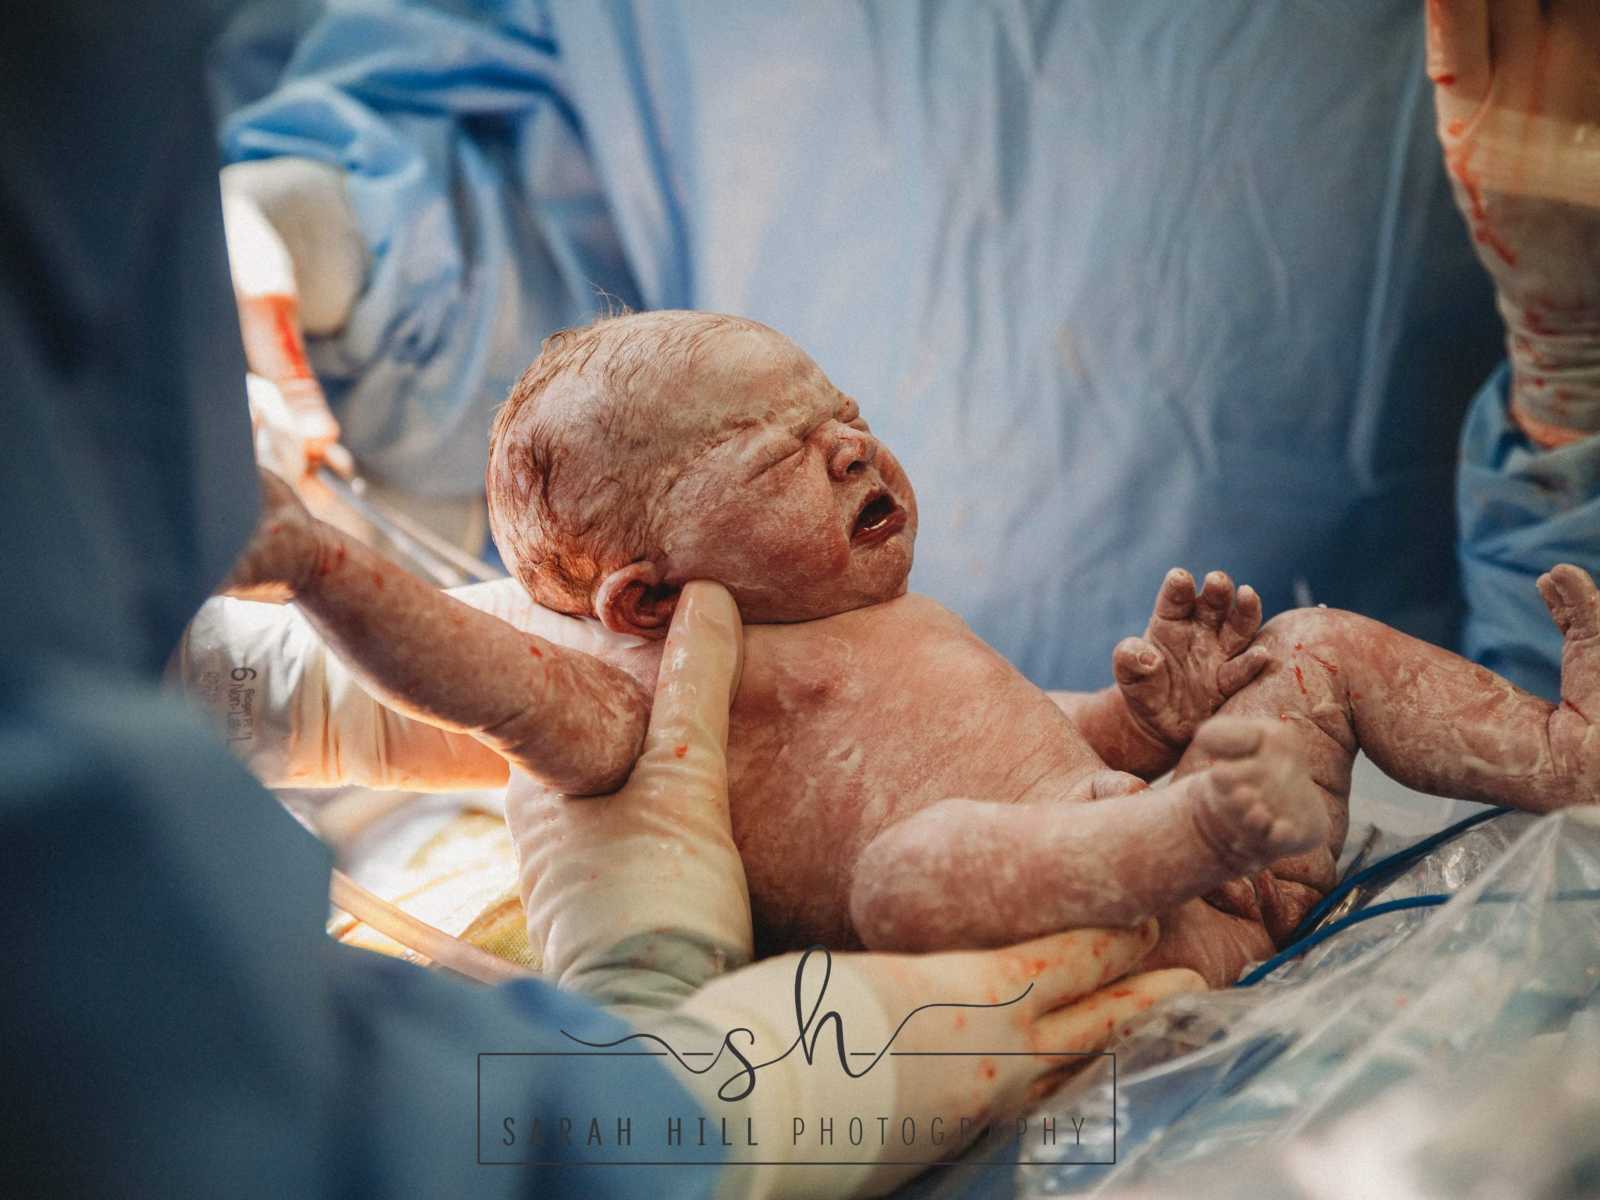 Newborn c-section baby crying